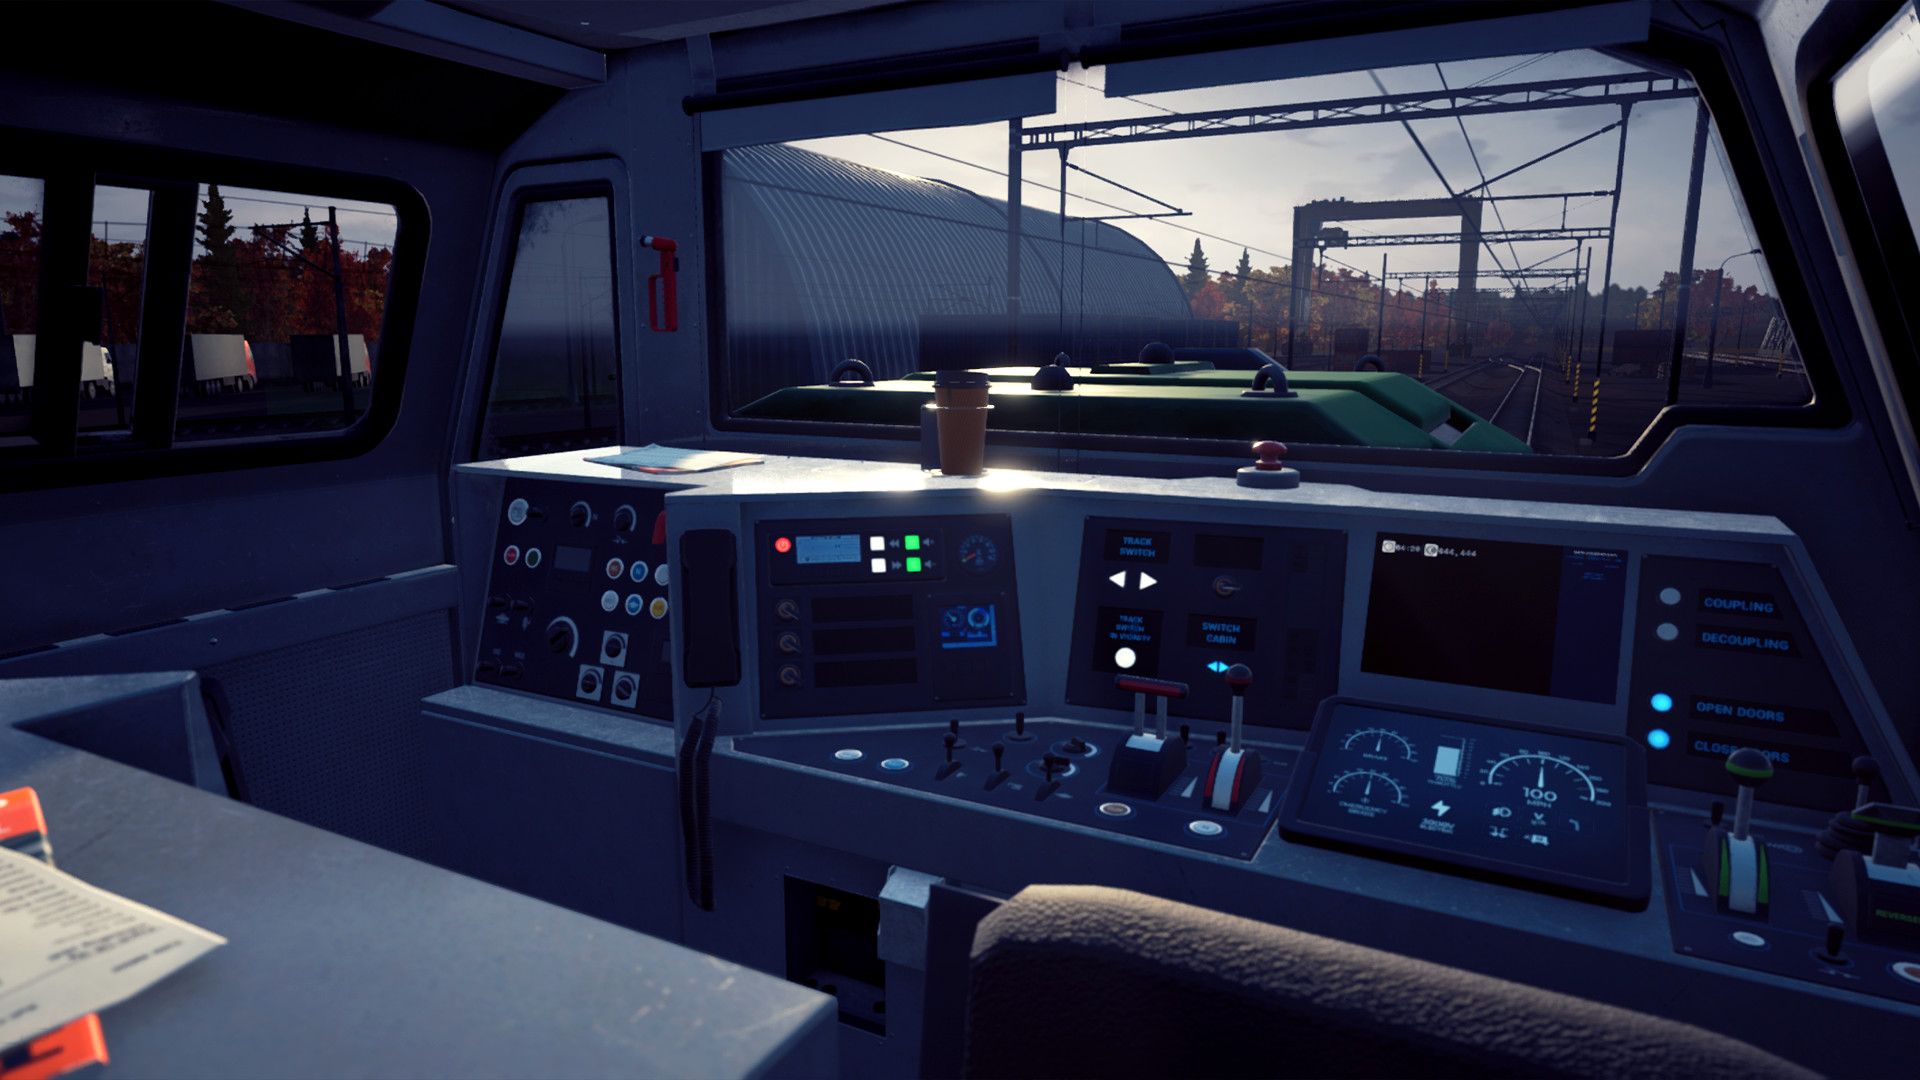 Train Life: A Railway Simulator Steam Account [USD 4.52]